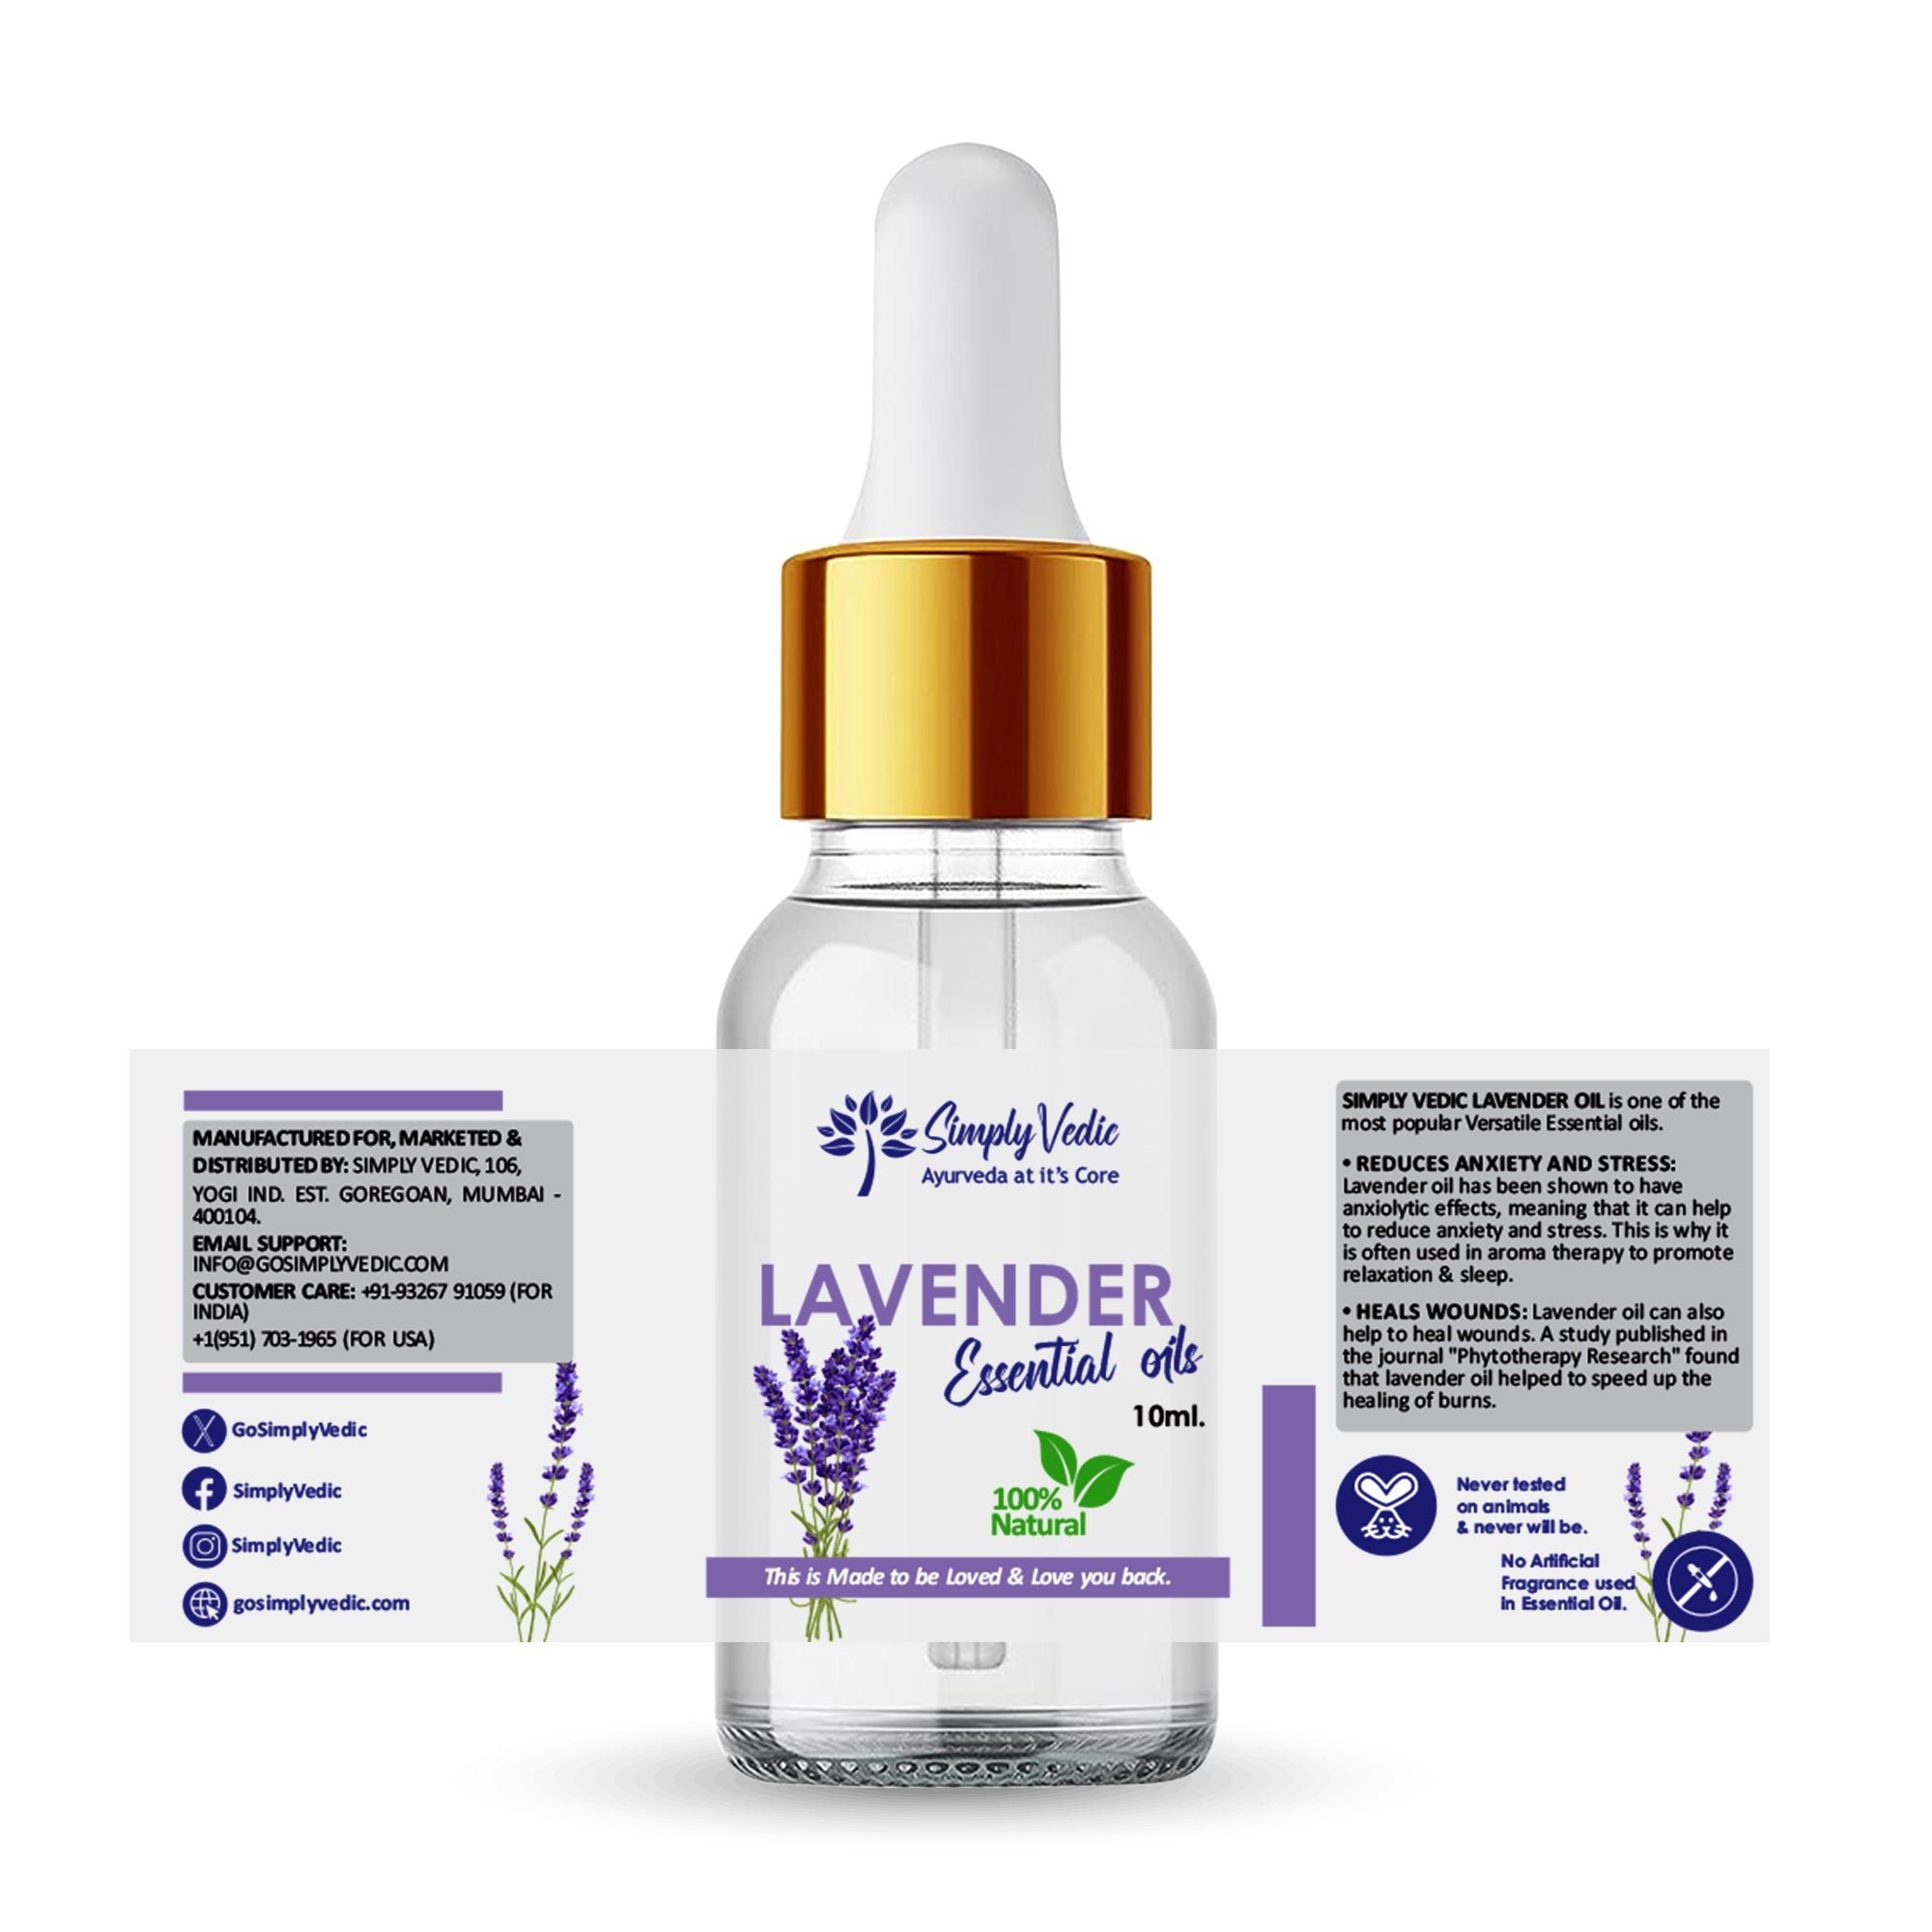 Simply Vedic's Lavender Essential Oil